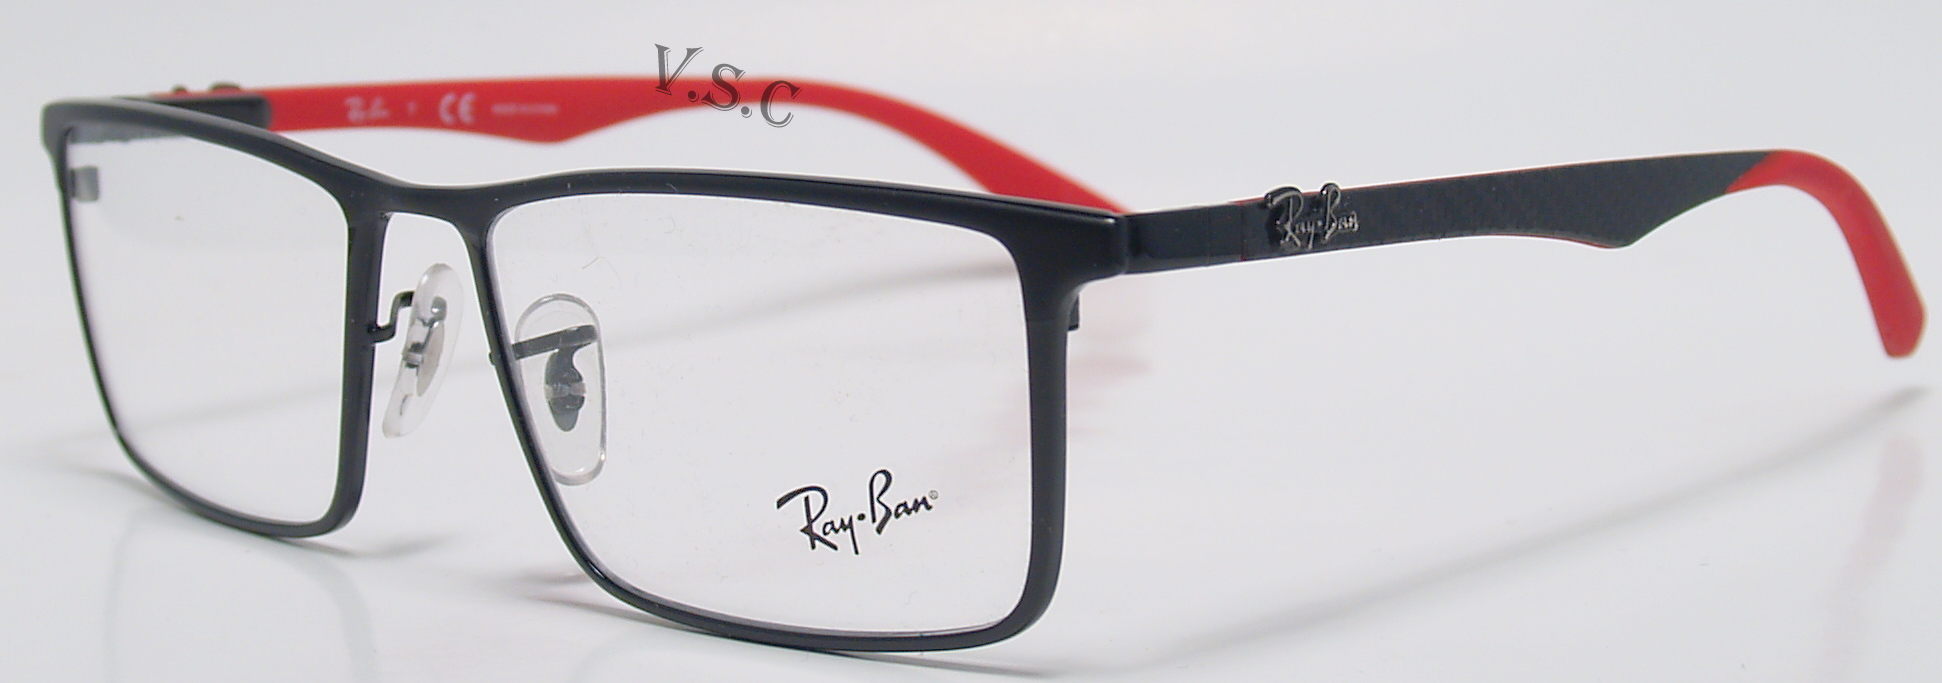 Ray Ban 8409 Eyeglasses